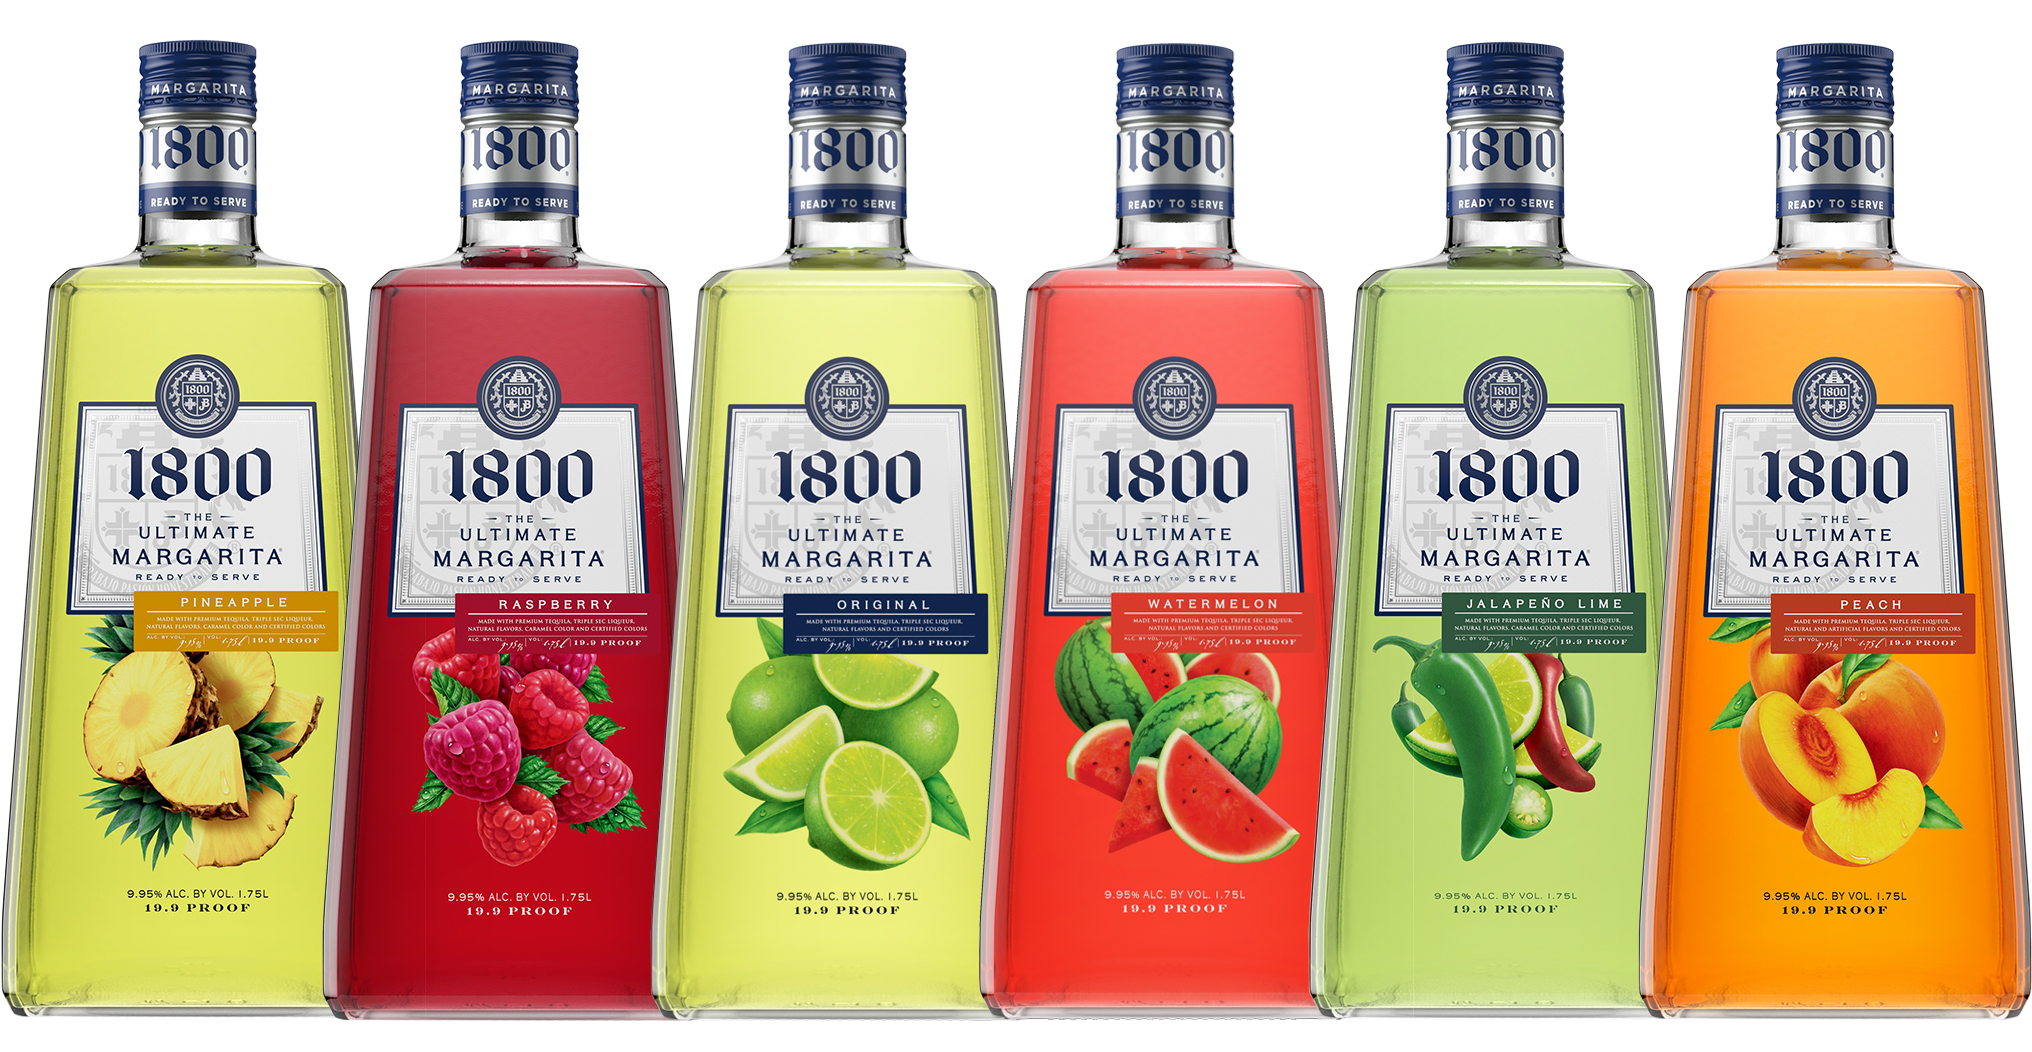 1800 Ultimate Blueberry Margarita Recipes